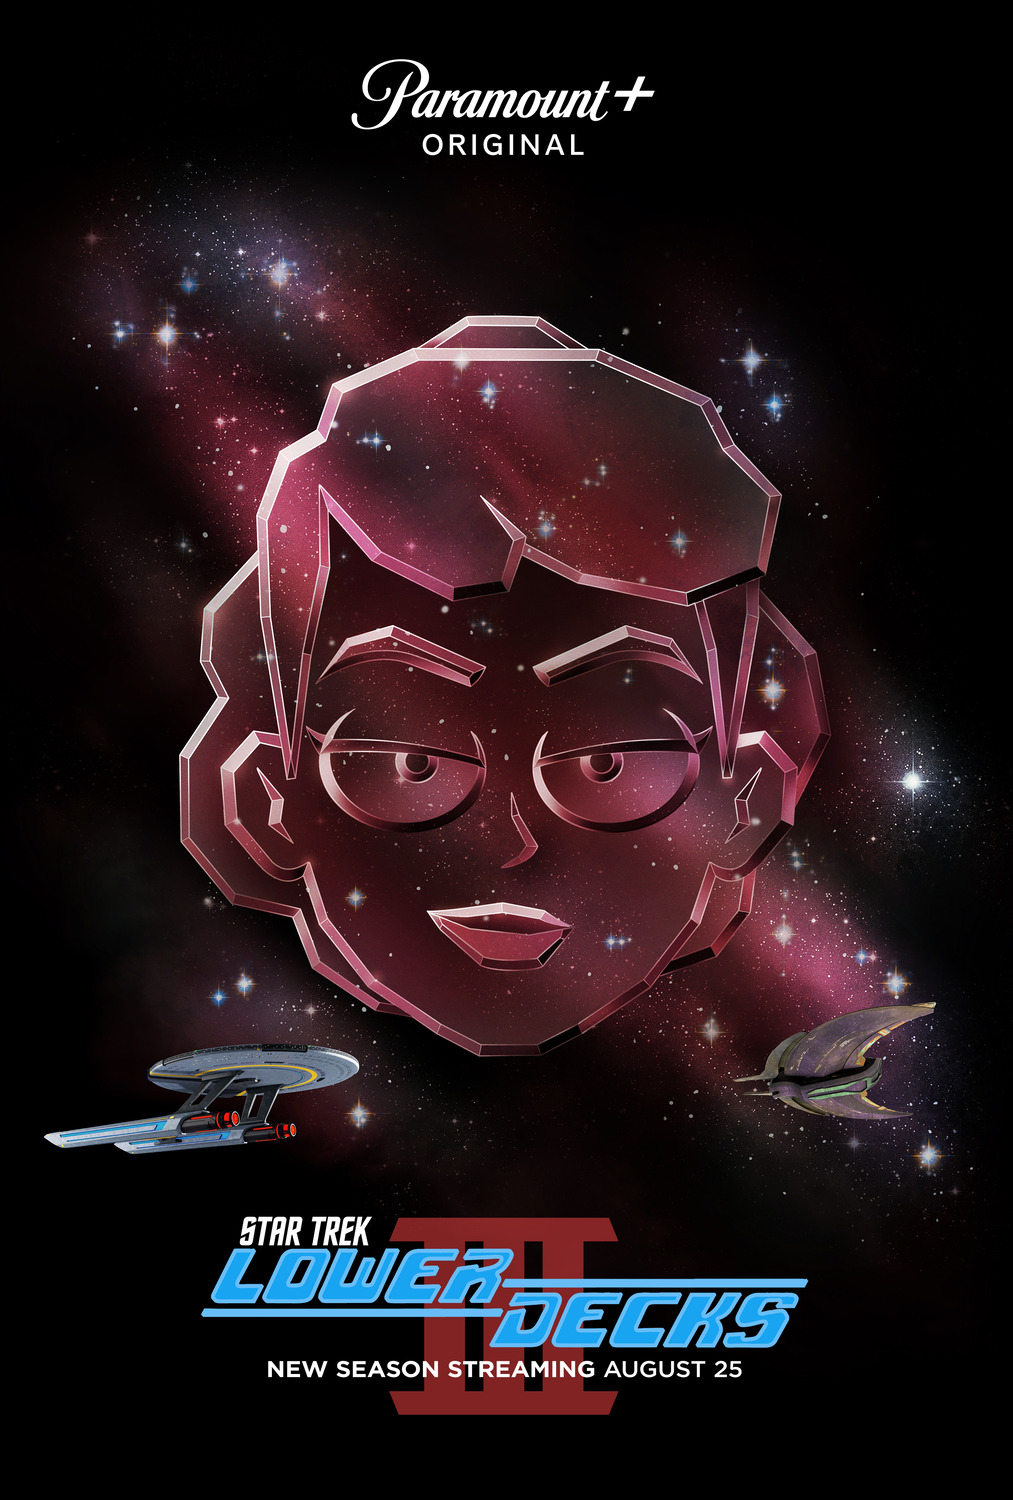 Extra Large Movie Poster Image for Star Trek: Lower Decks (#7 of 10)